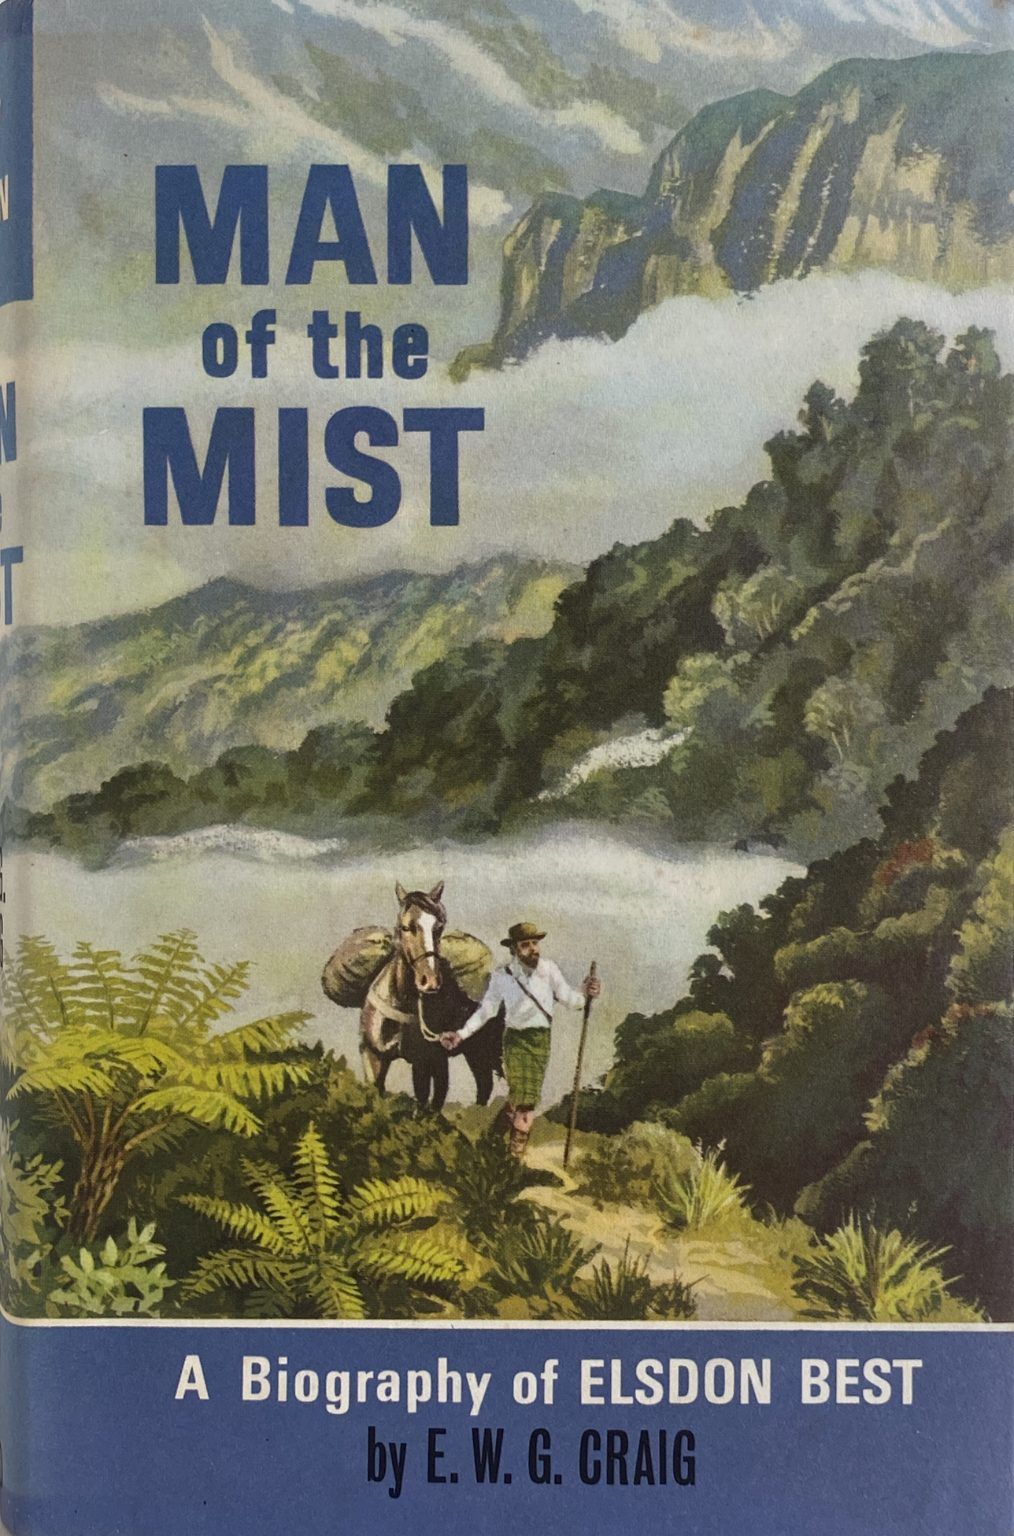 MAN OF THE MIST: A Biography of Elsdon Best